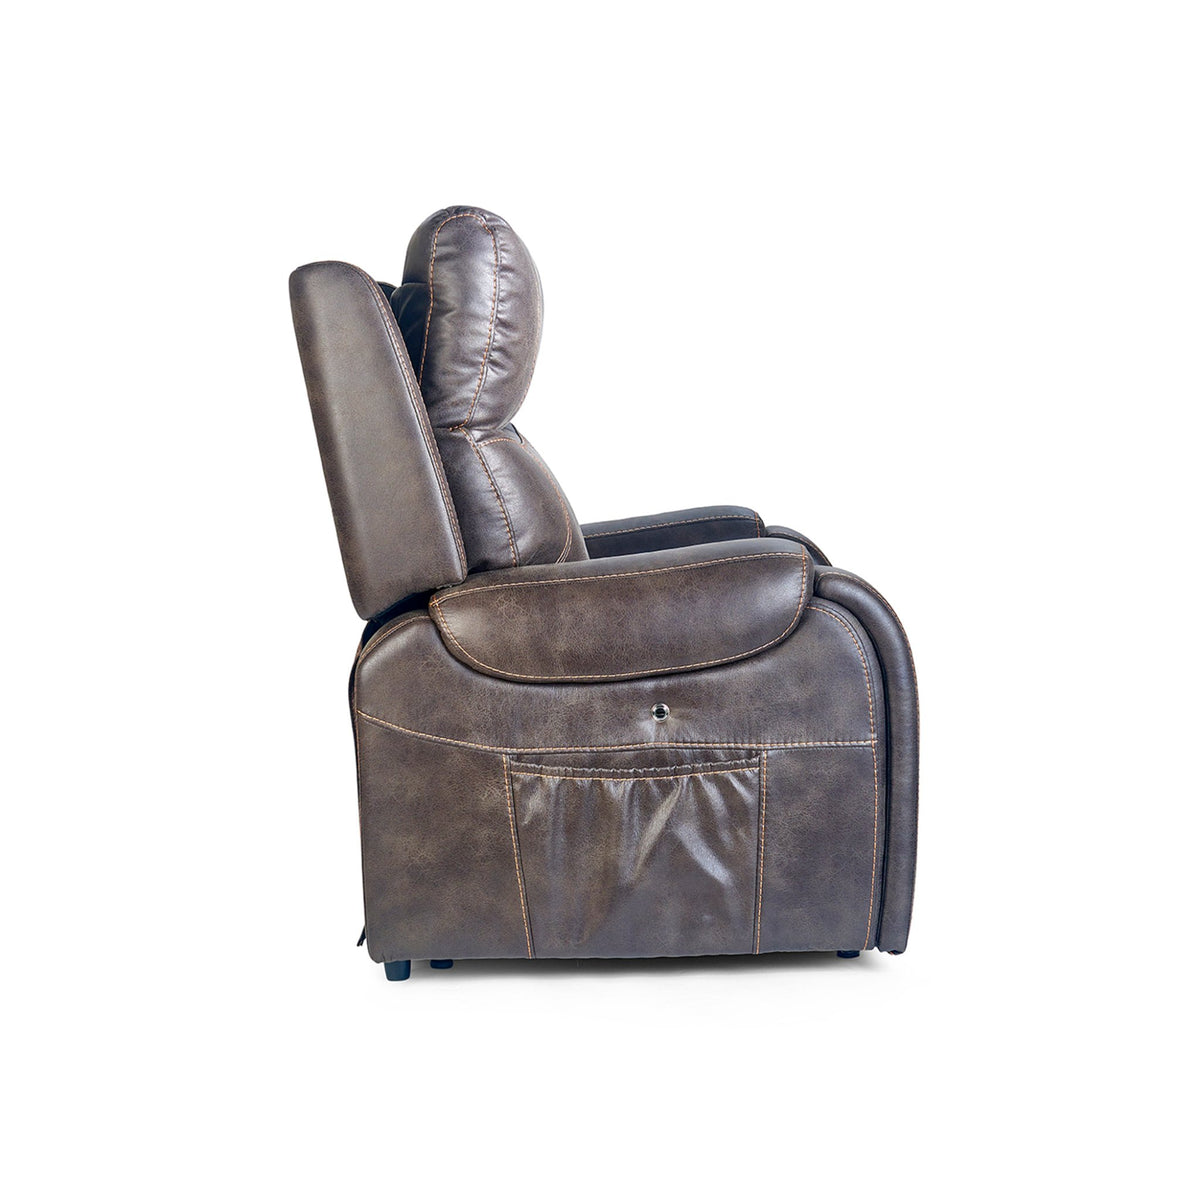 UltraComfort Sedona Power Lift Chair Recliner